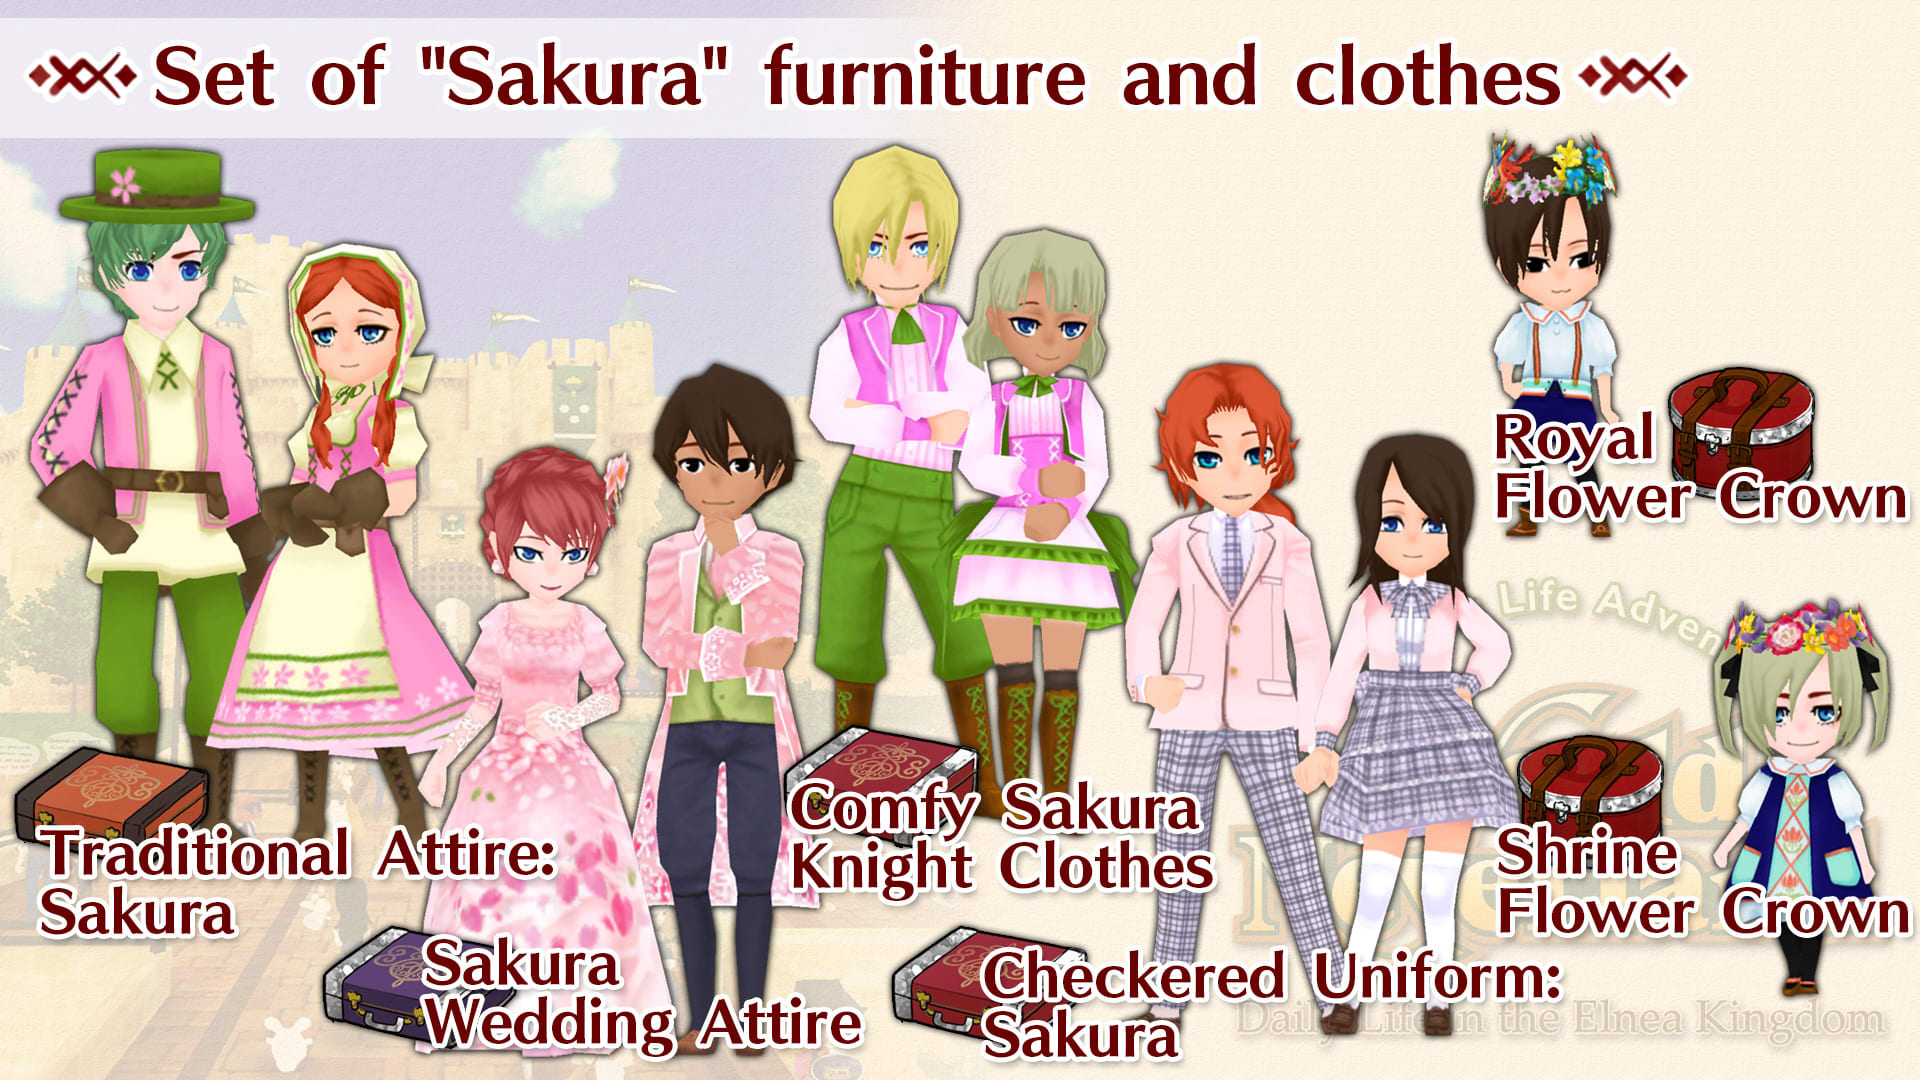 Set of "Sakura" furniture and clothes